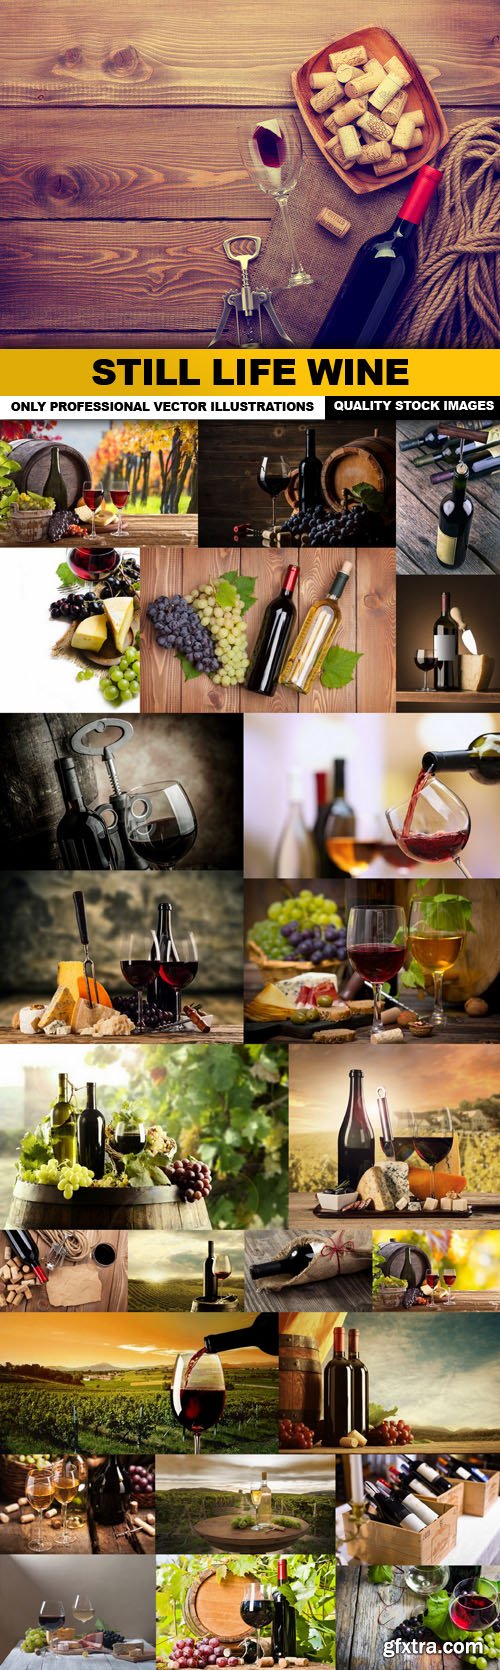 Still Life Wine - 25 HQ Images